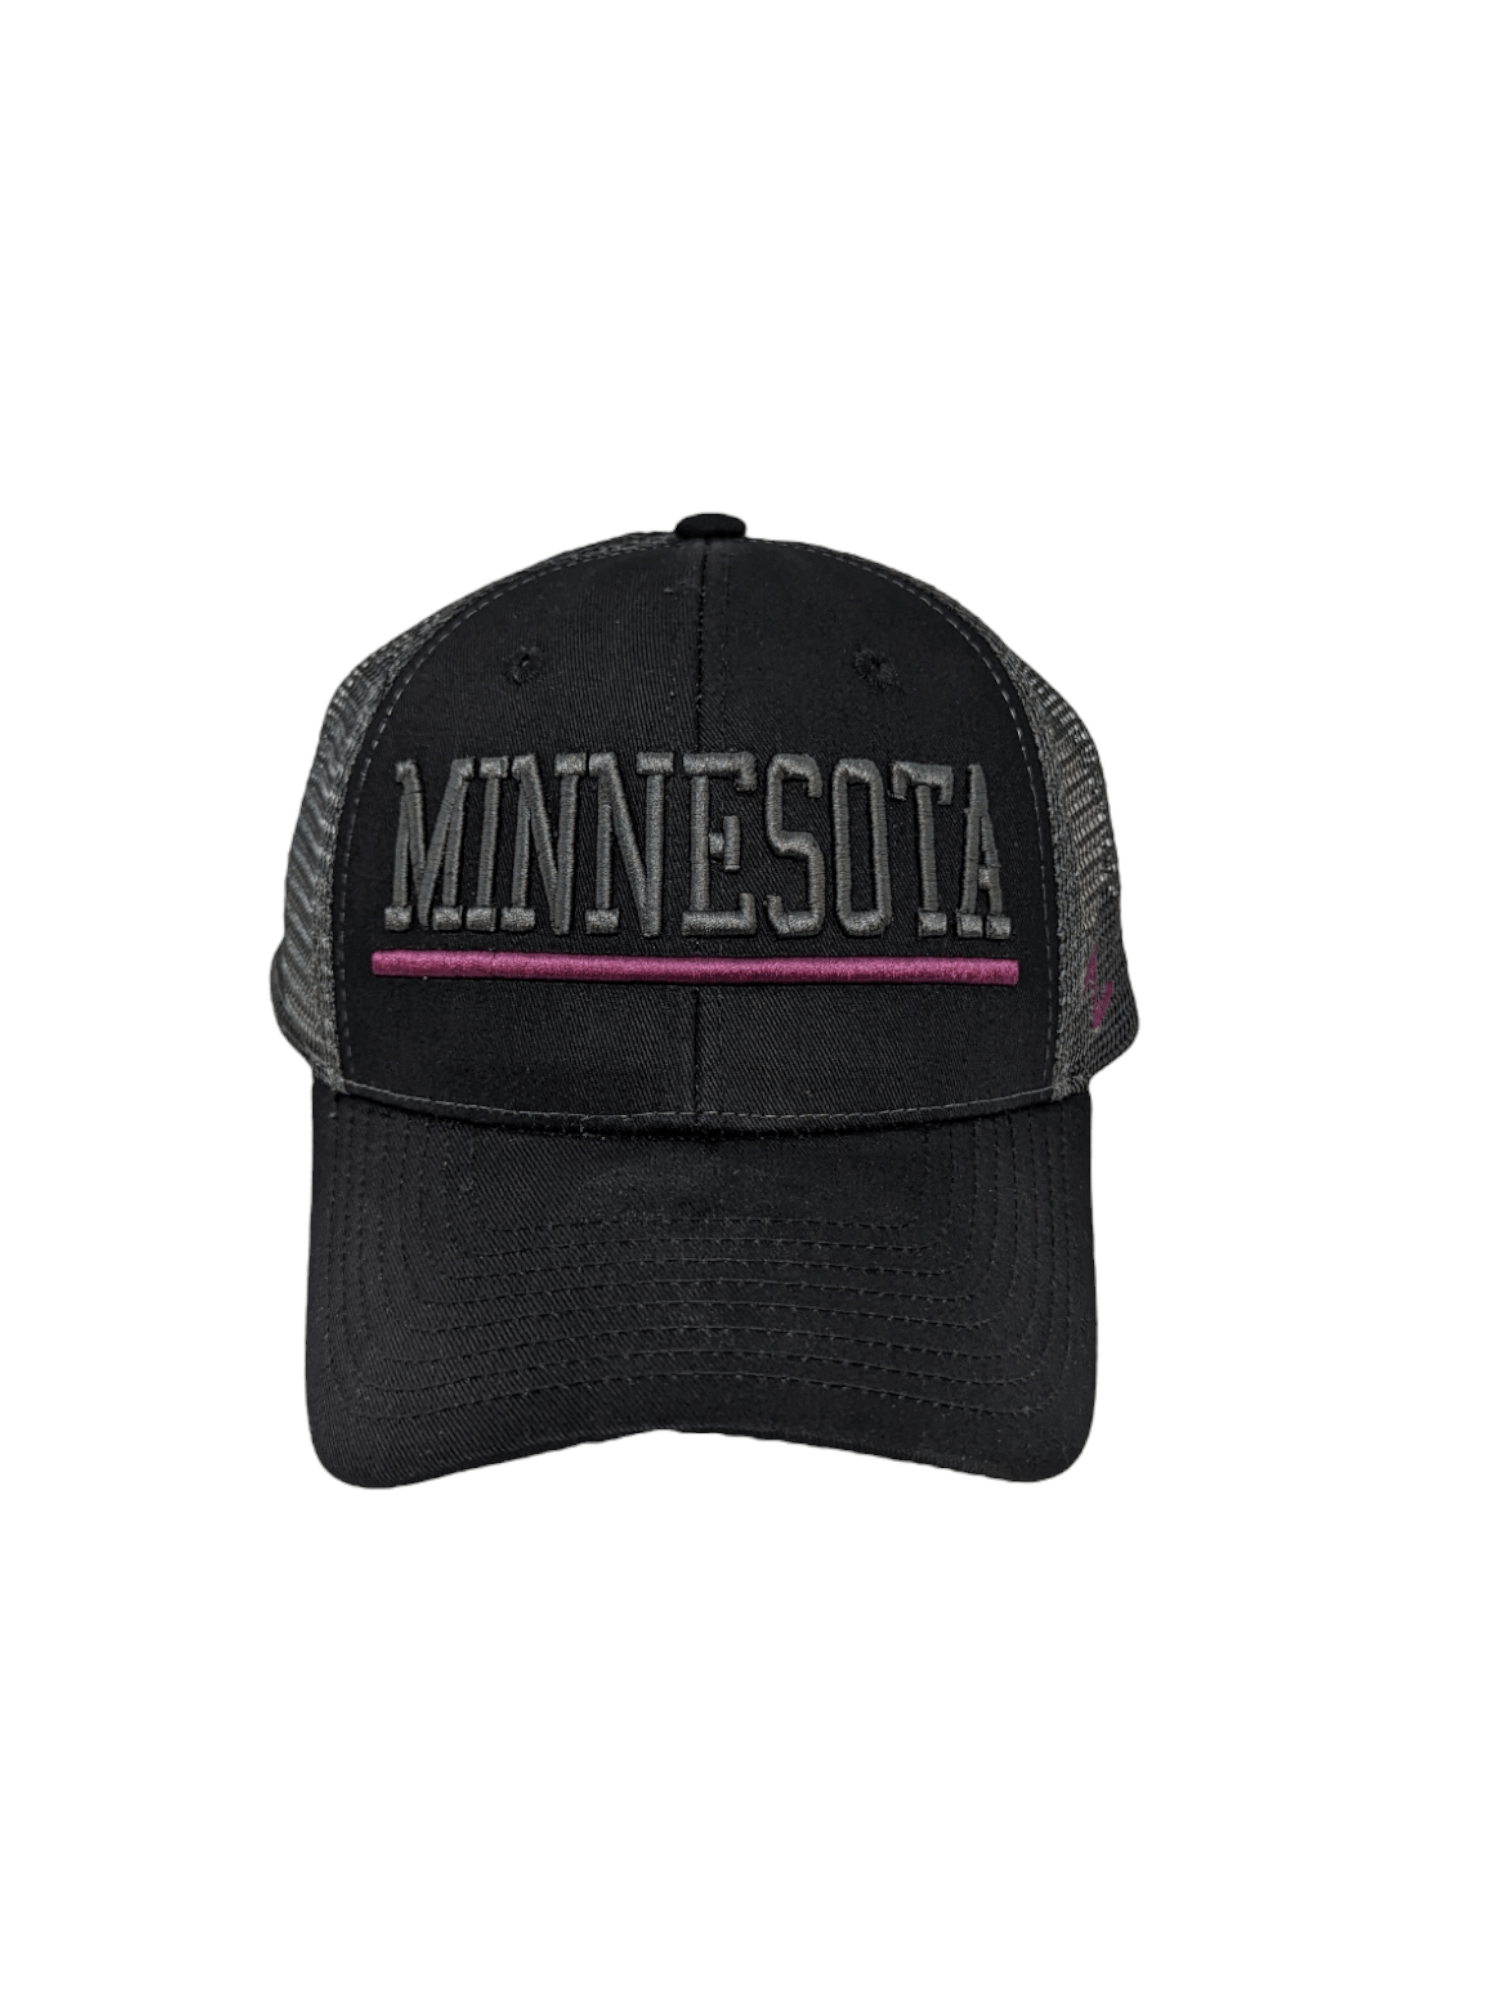 Zephyr Hat Minnesota Gophers Upfront Blackout Hat